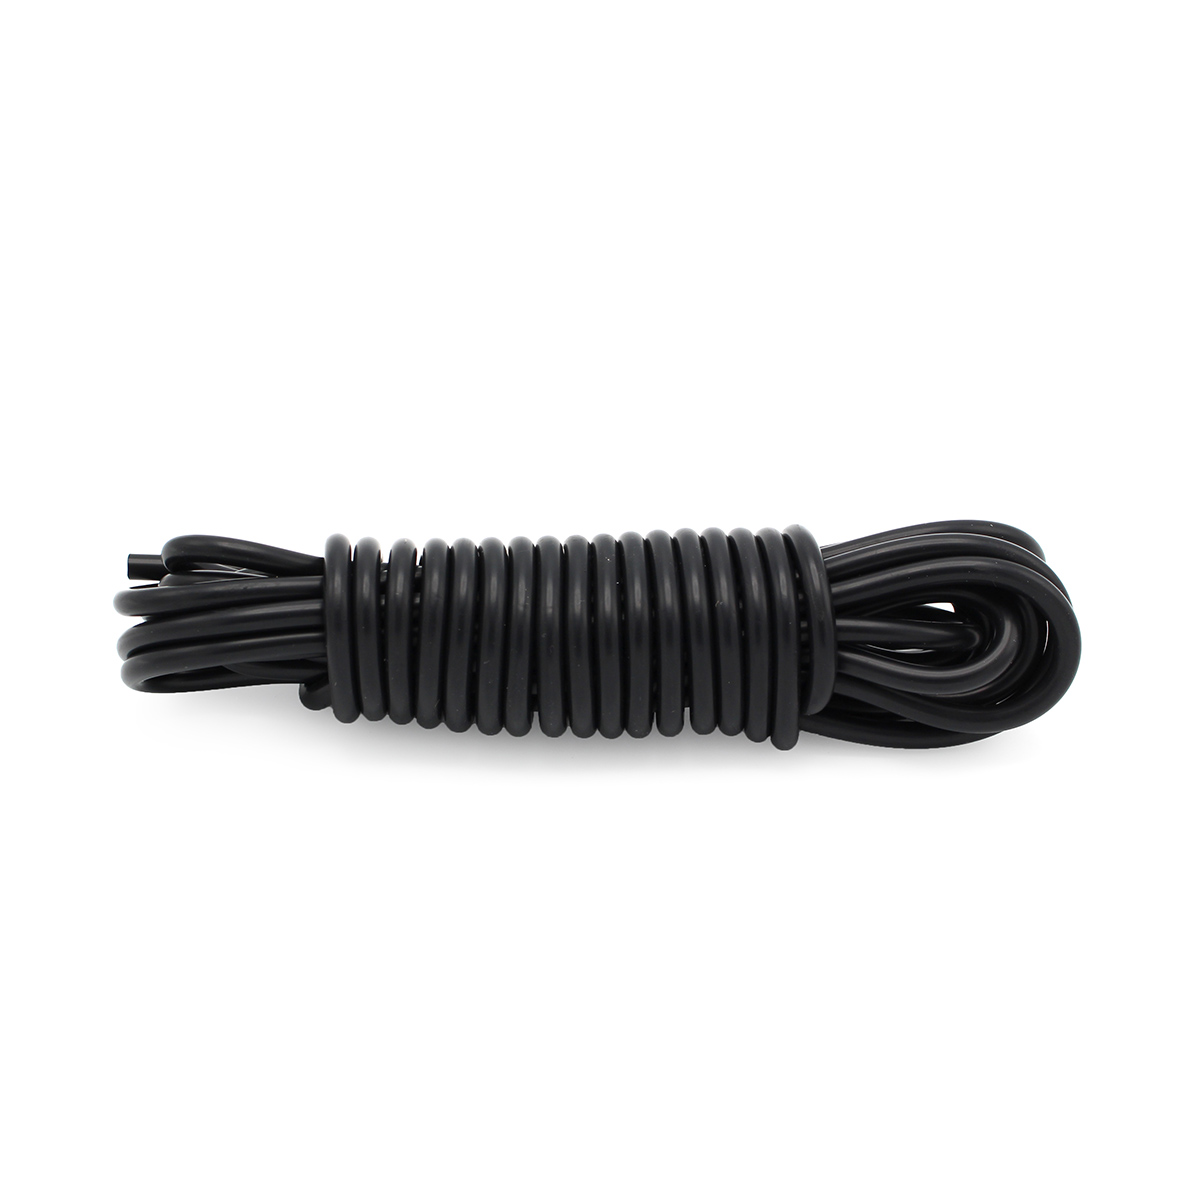 Silicone-Rope-Black-5-meter-OPR-2050056-1